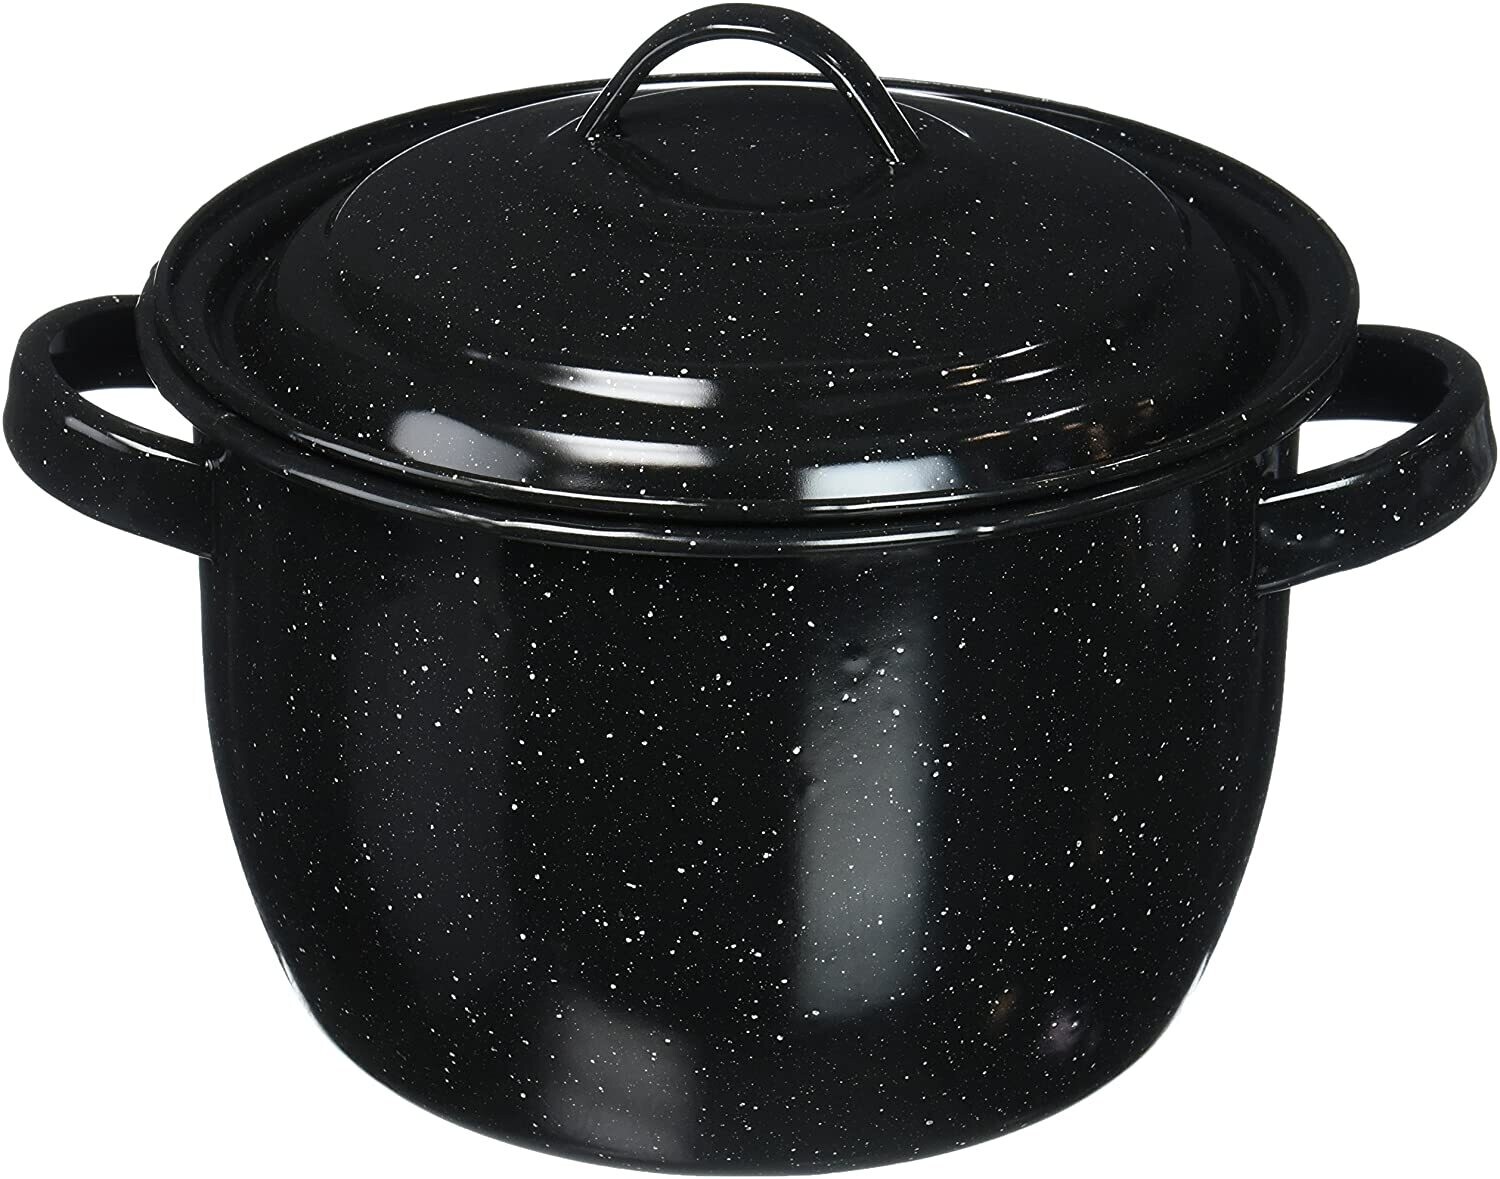 Granite Ware 4qt Bean Pot with lid - riveted handles